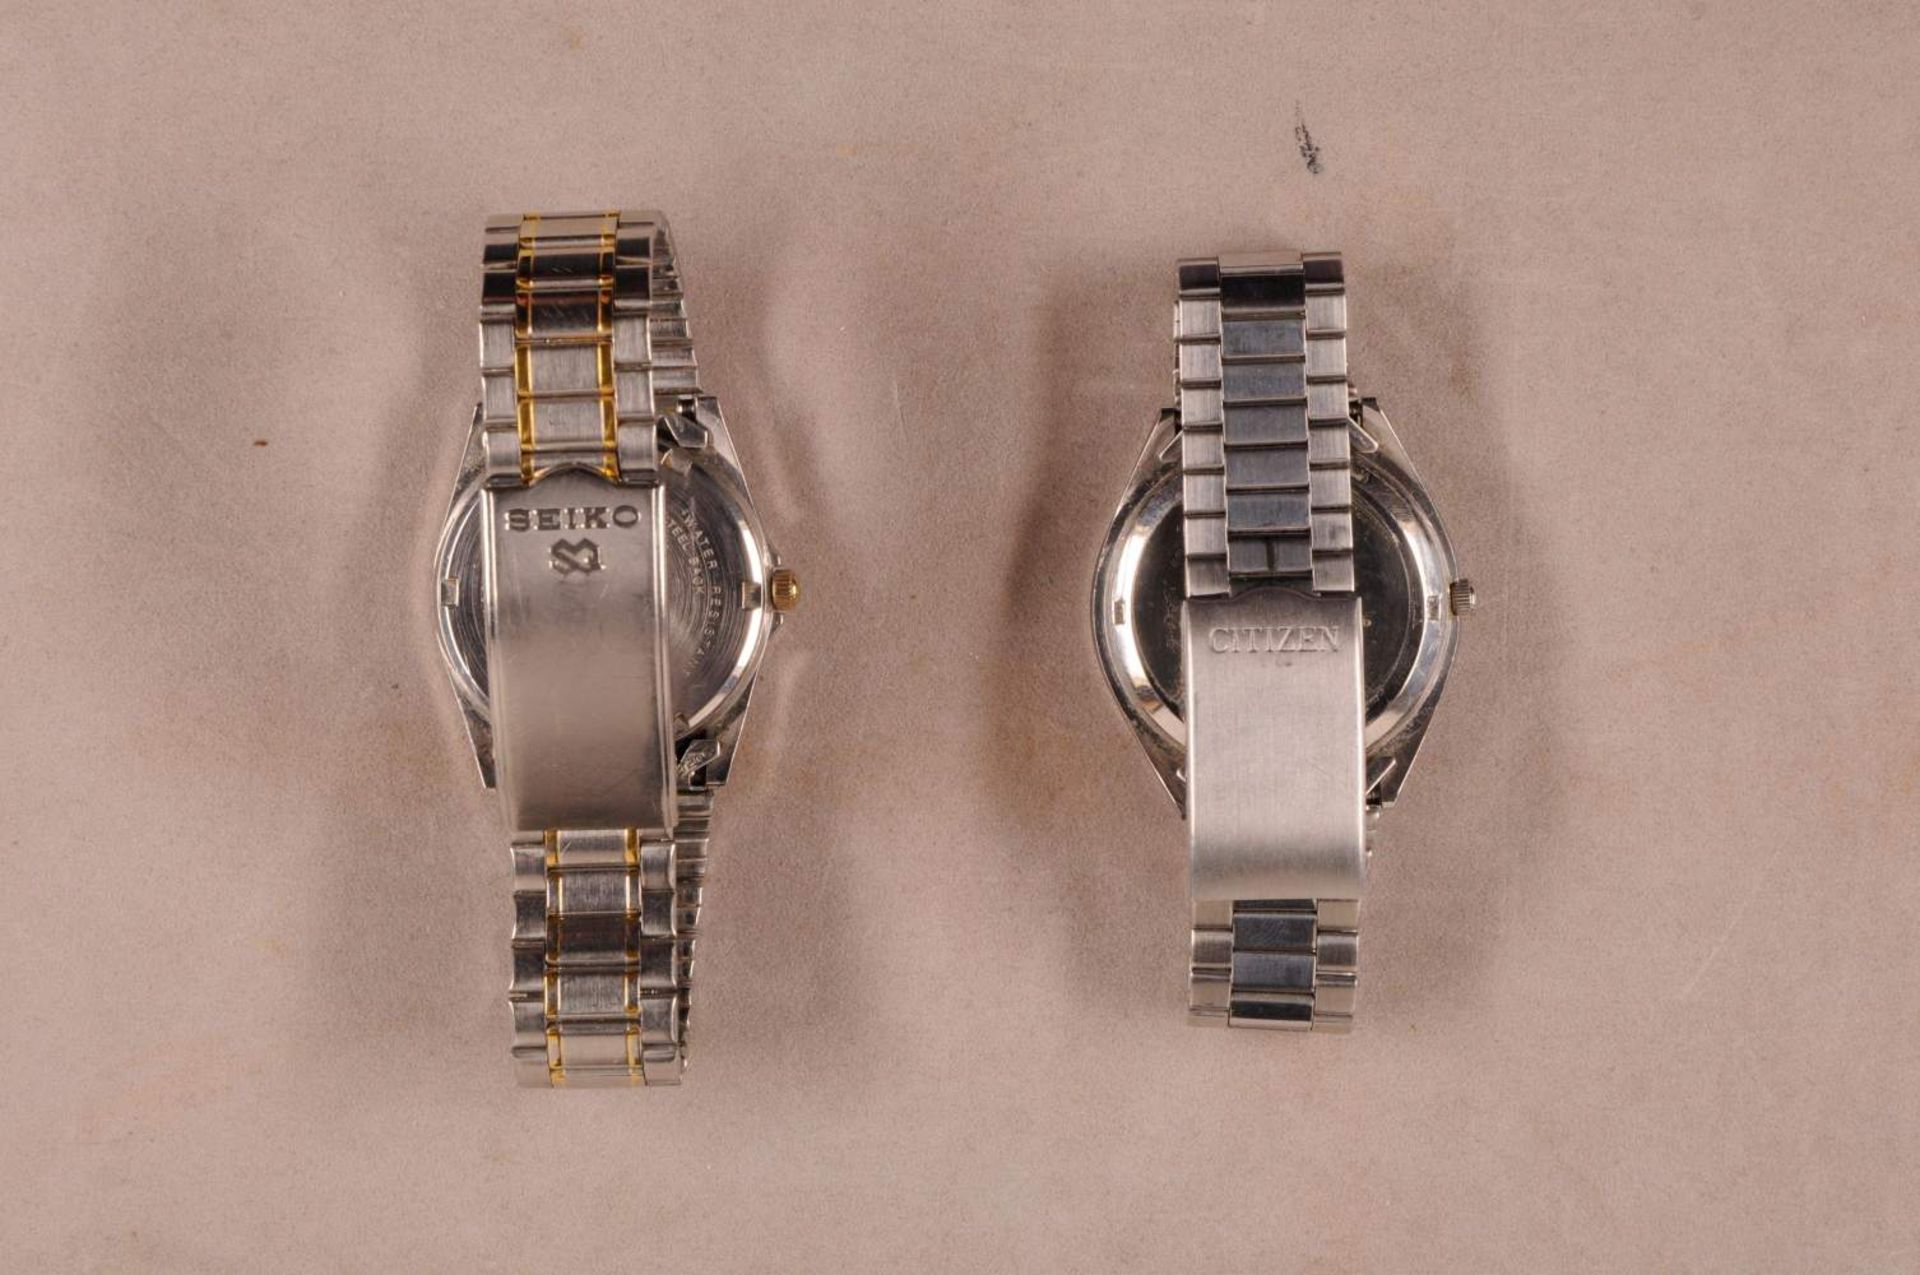 Lot 7 Armbanduhren Edelstahl/Metall/Kunststoff, tlw. vergoldet, bestehend aus: Seiko, Citizen, - Bild 10 aus 10